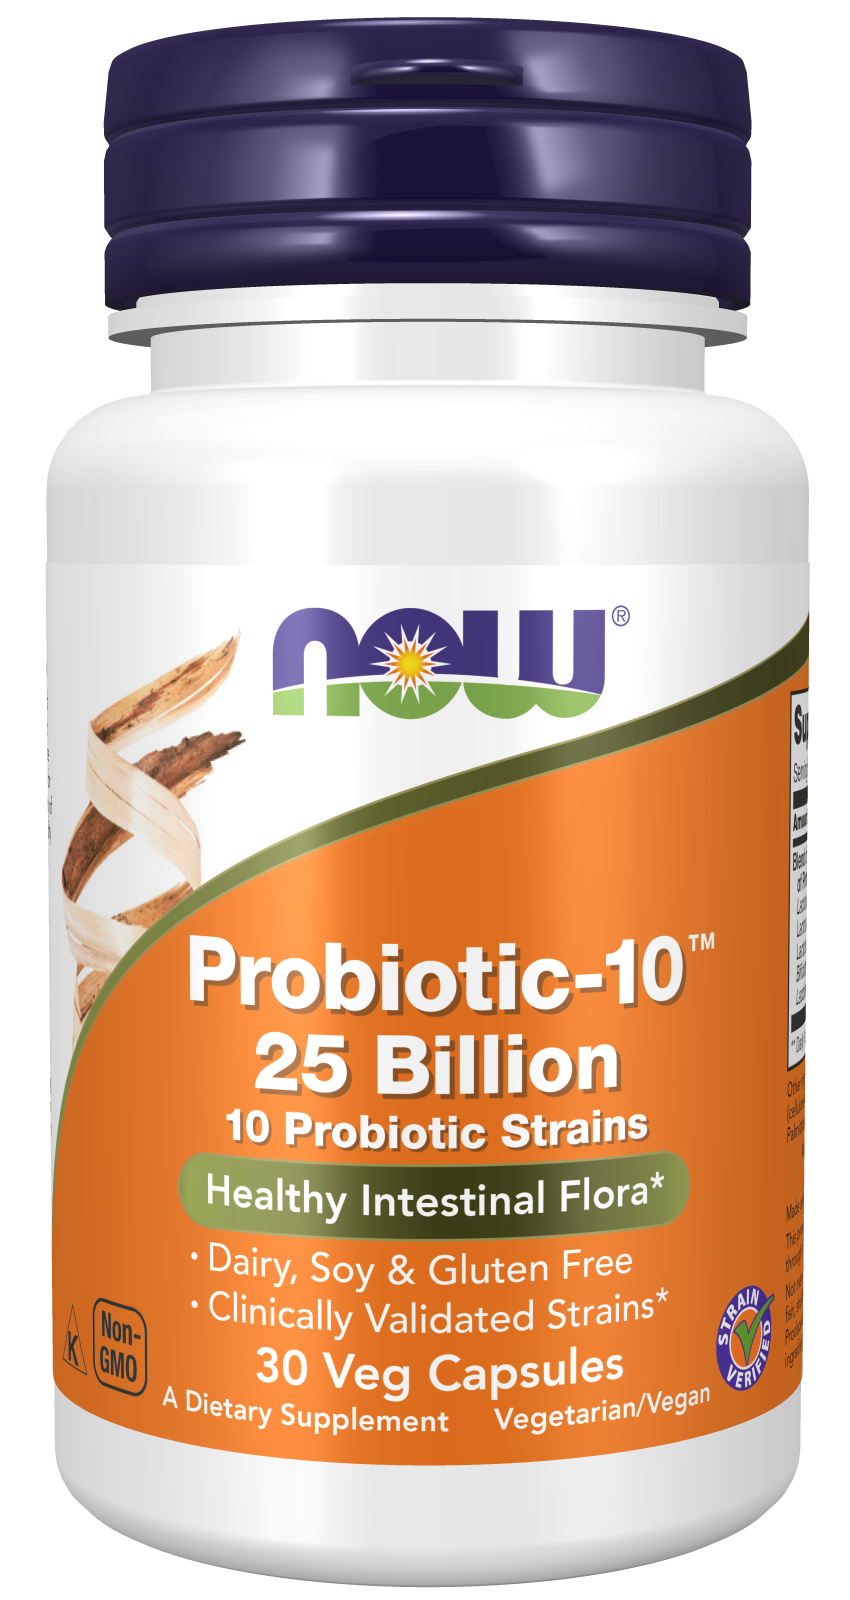 Low-priced probiotic supplements